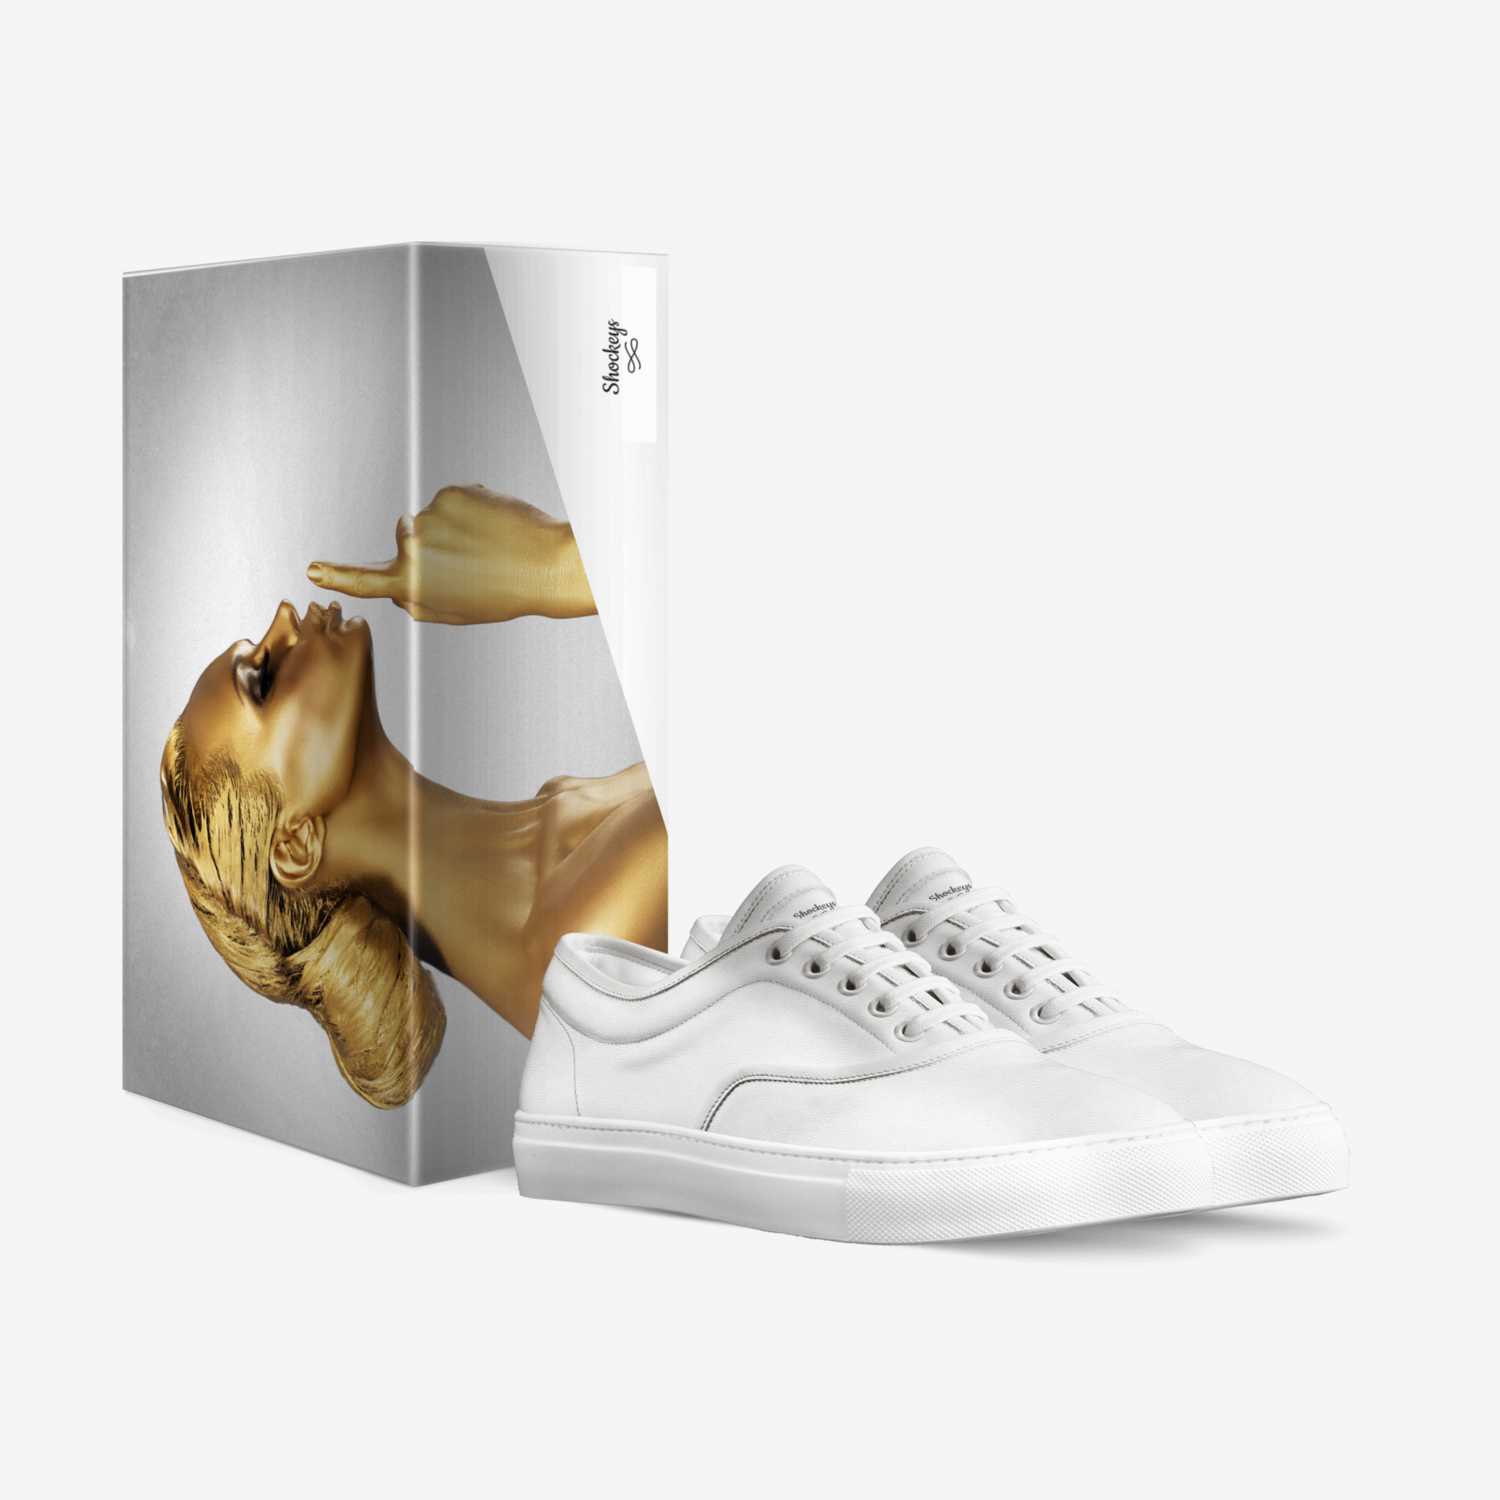 Shockeys  custom made in Italy shoes by Jonathan Robinson | Box view